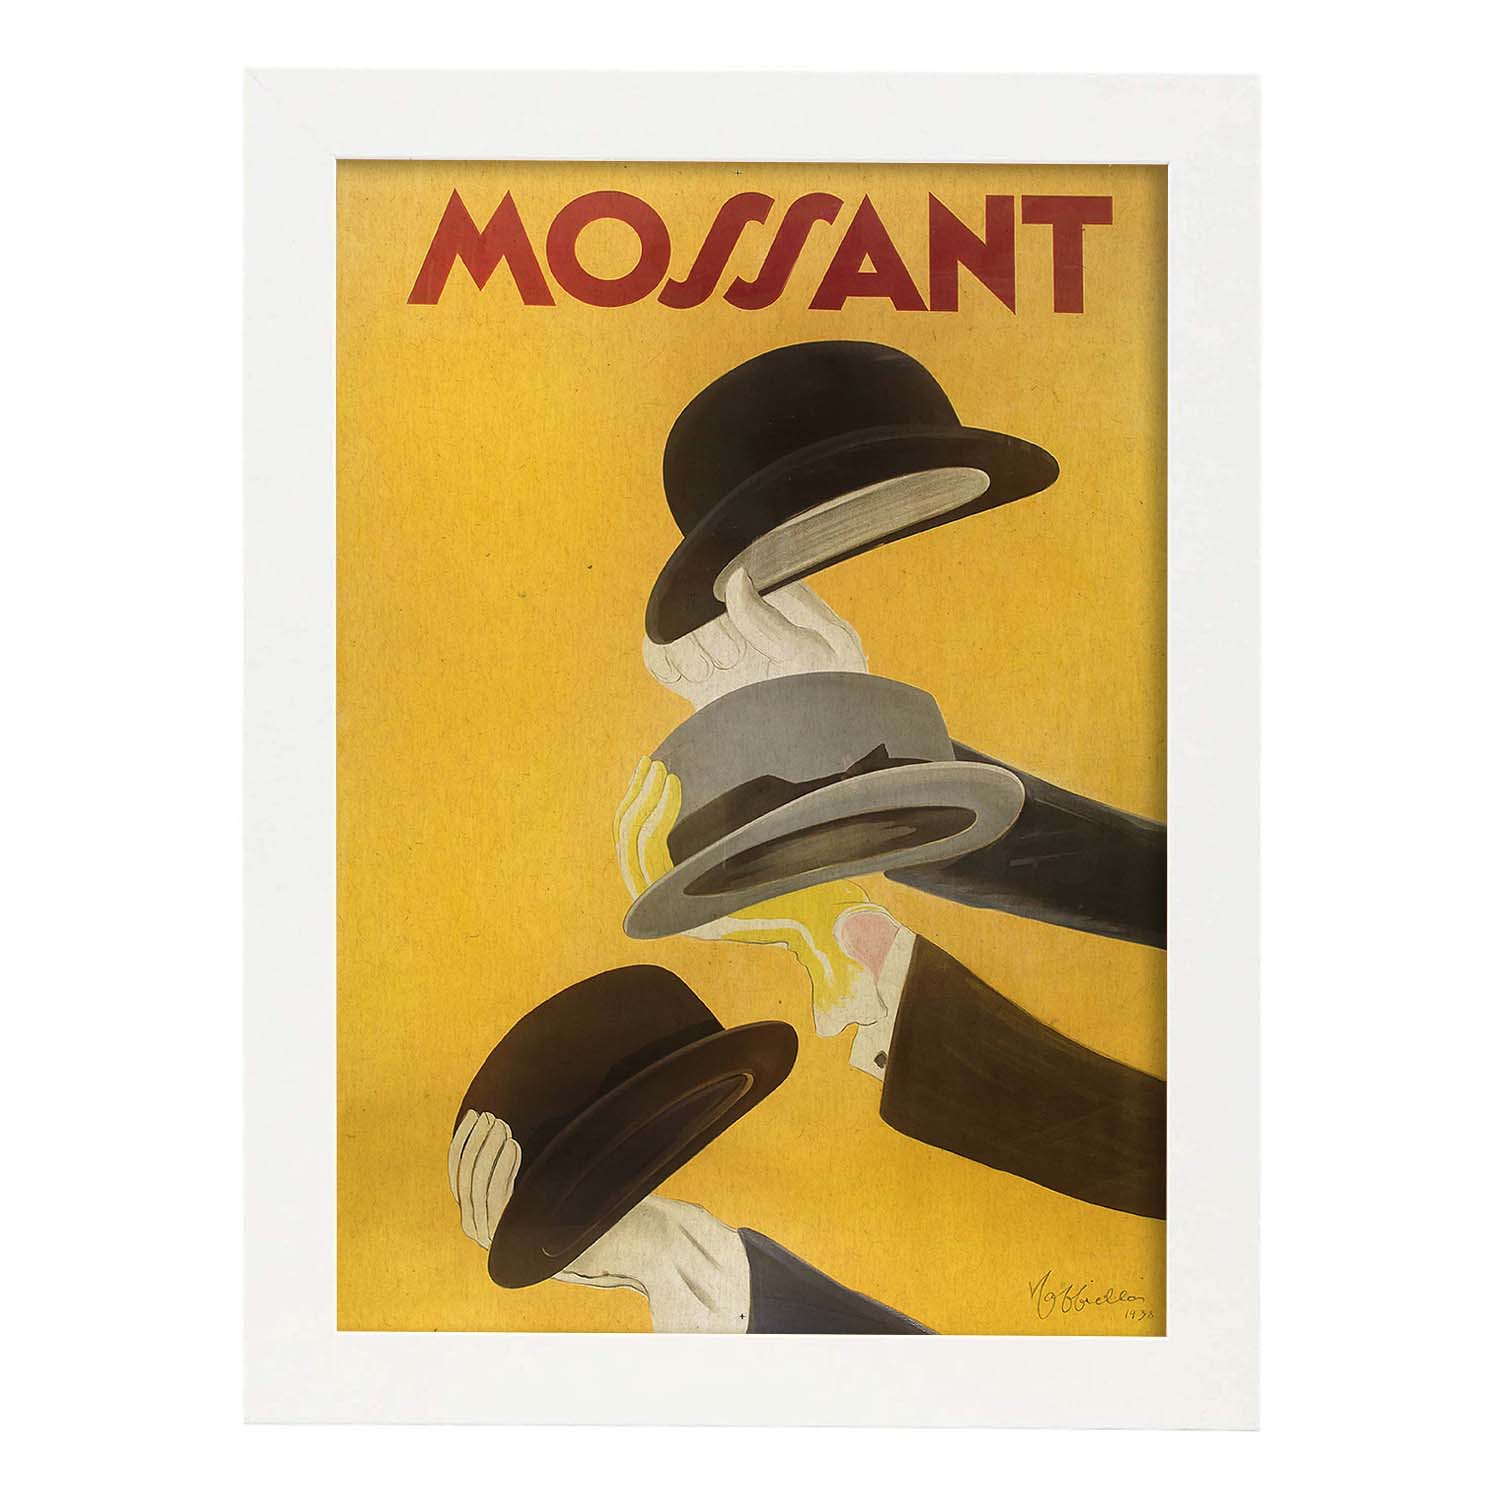 Poster vintage. Cartel vintage "Mossant" Leonetto Cappiello de 1938..-Artwork-Nacnic-A3-Marco Blanco-Nacnic Estudio SL